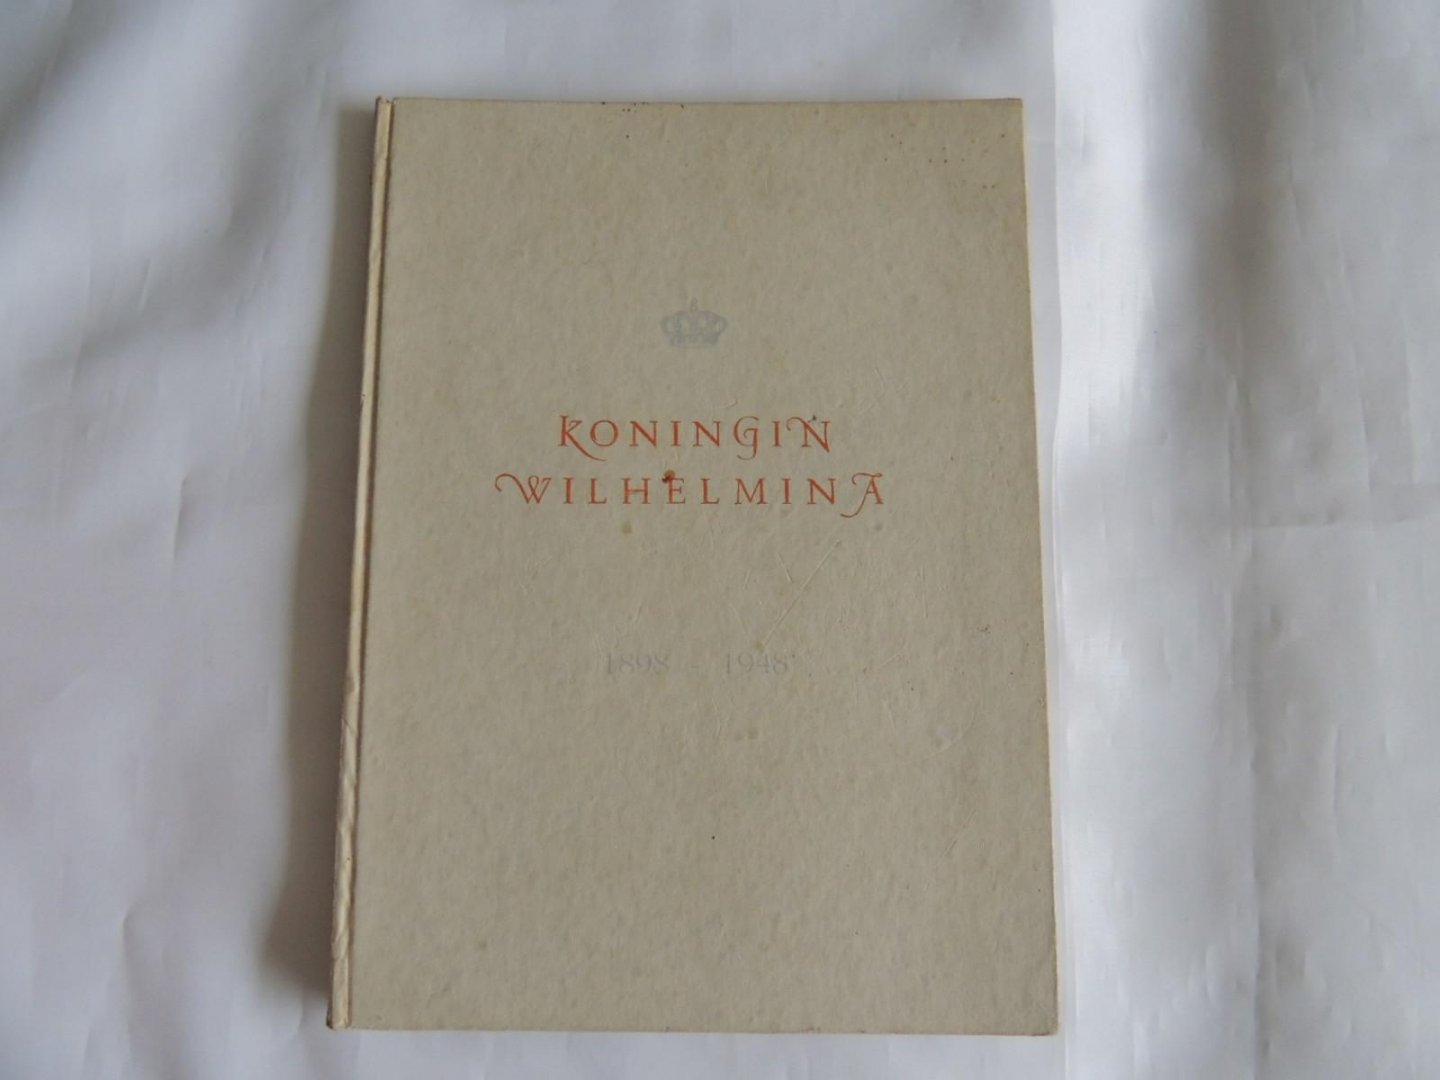 Keuls H.W.J.M. -- teekeningen Charles Roelofsz -- Susanne Heyneman /// J.W. Regeling / I. Mug - Aan onze Koningin. In het jaar der bevrijding 1945. Gedicht van H.W.J.M. Keuls. Teekeningen van Charles Roelofsz., Calligraphie van Susanne Heyneman. /// Koningin Wilhelmina 1898 - 1948